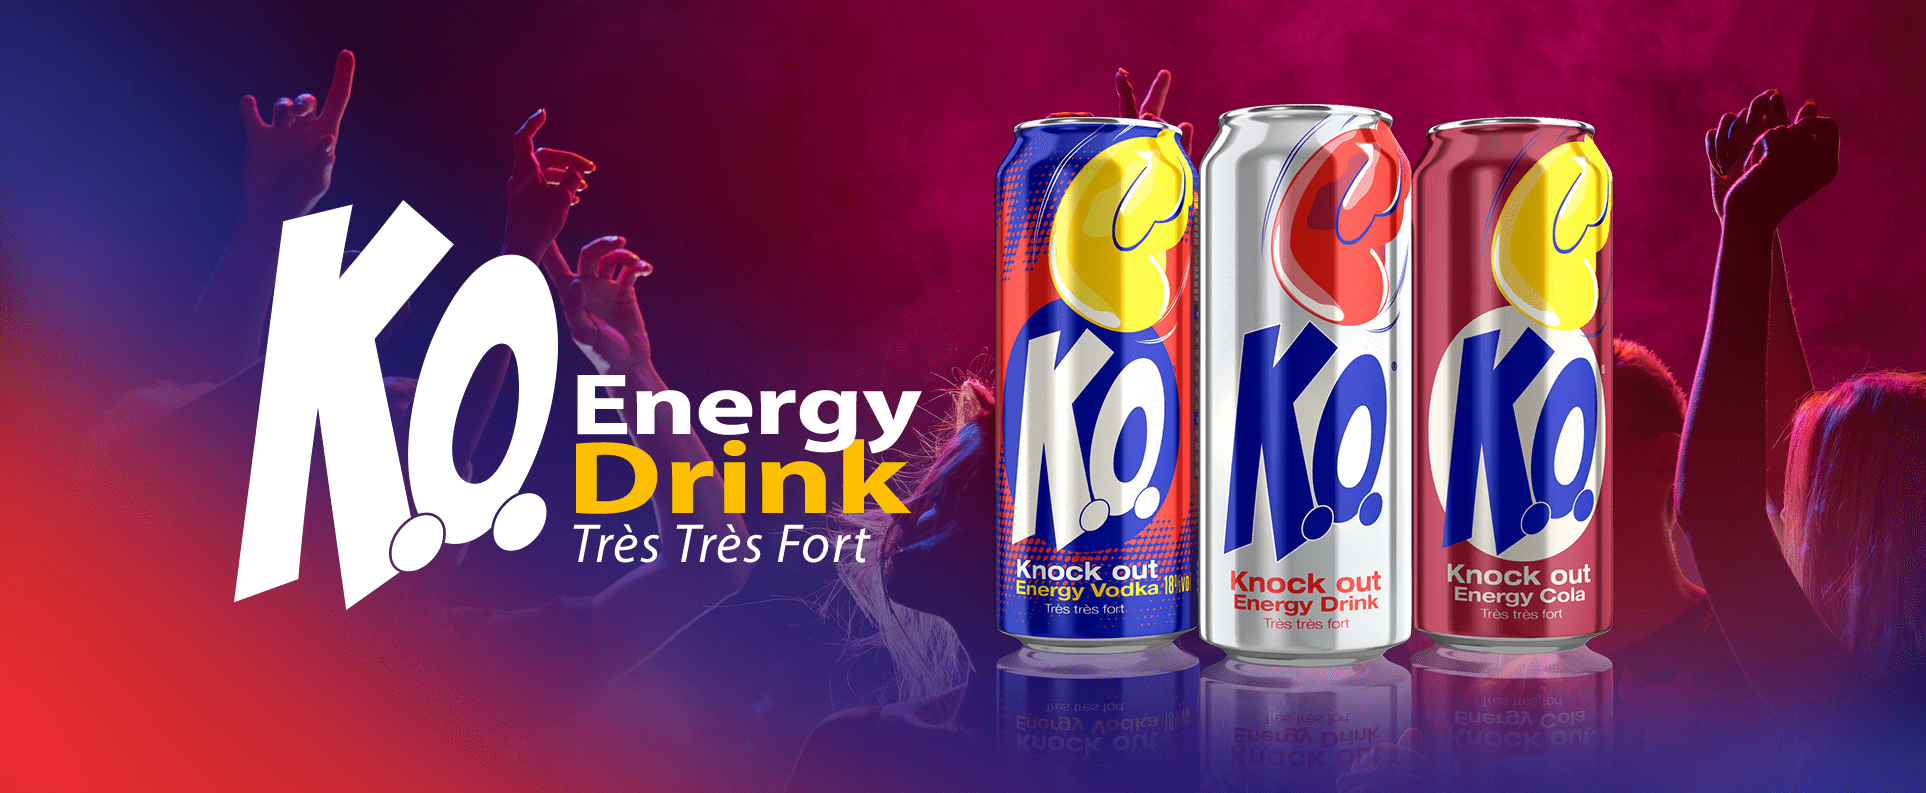 K.O Energy Drink